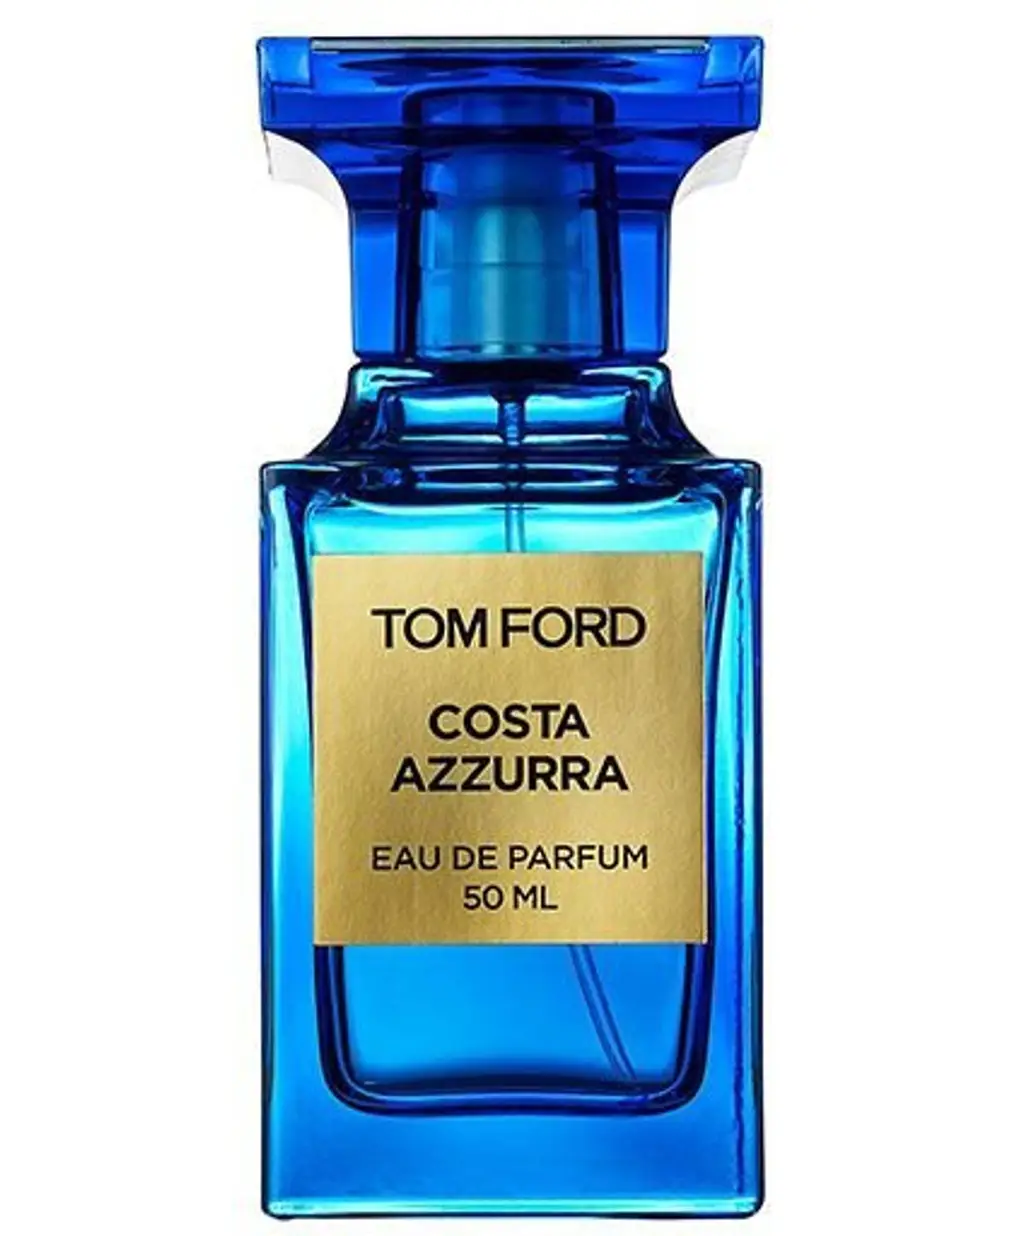 Costa Azzurra by Tom Ford Beauty